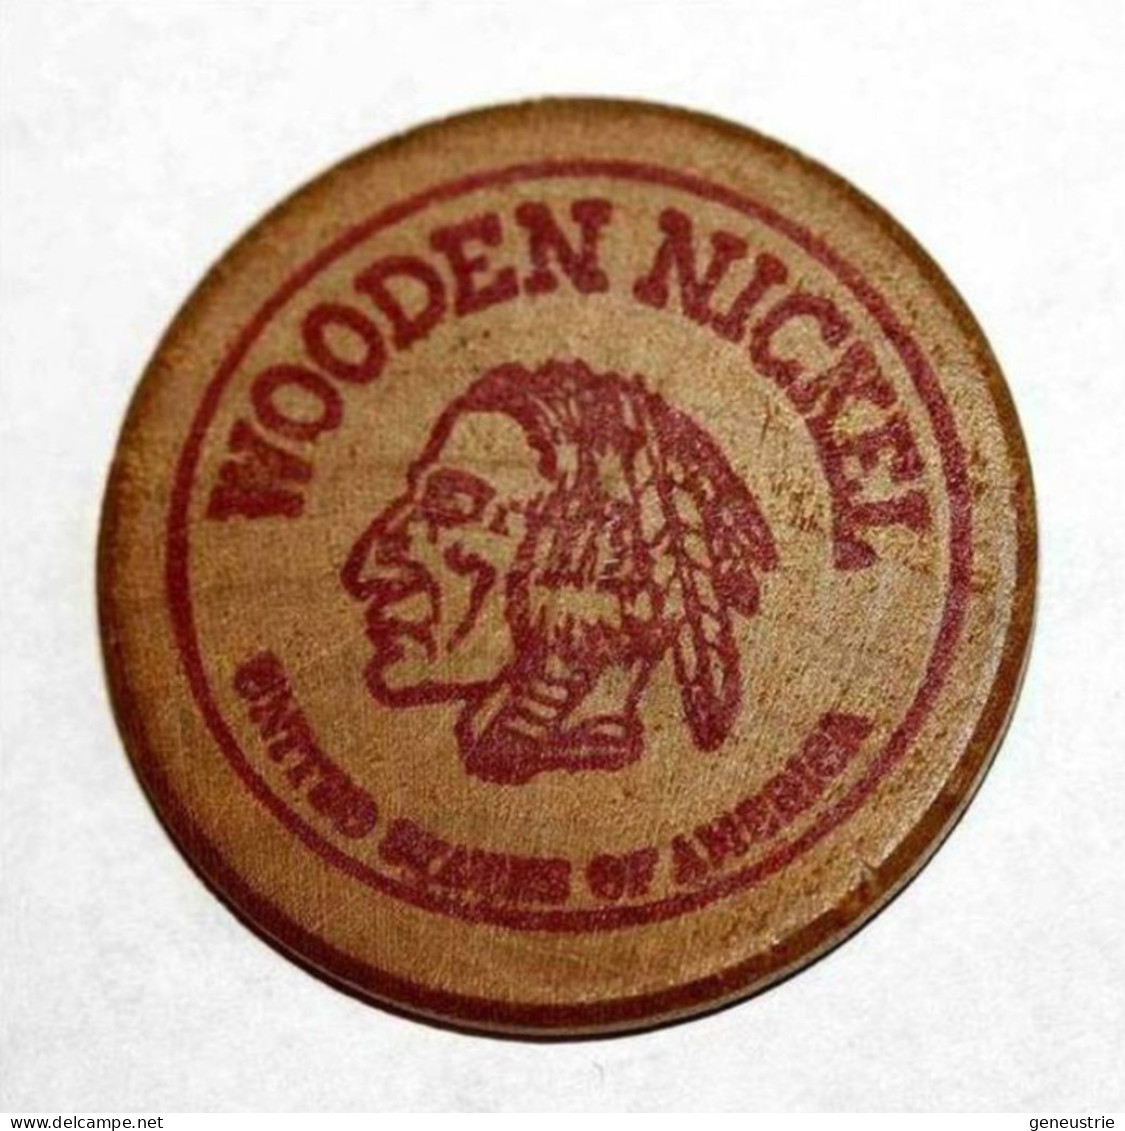 Wooden Token 1$ - Wooden Nickel - Jeton Bois Monnaie Nécessité - Tête D'Indien - One Dollar - Etats-Unis - Notgeld